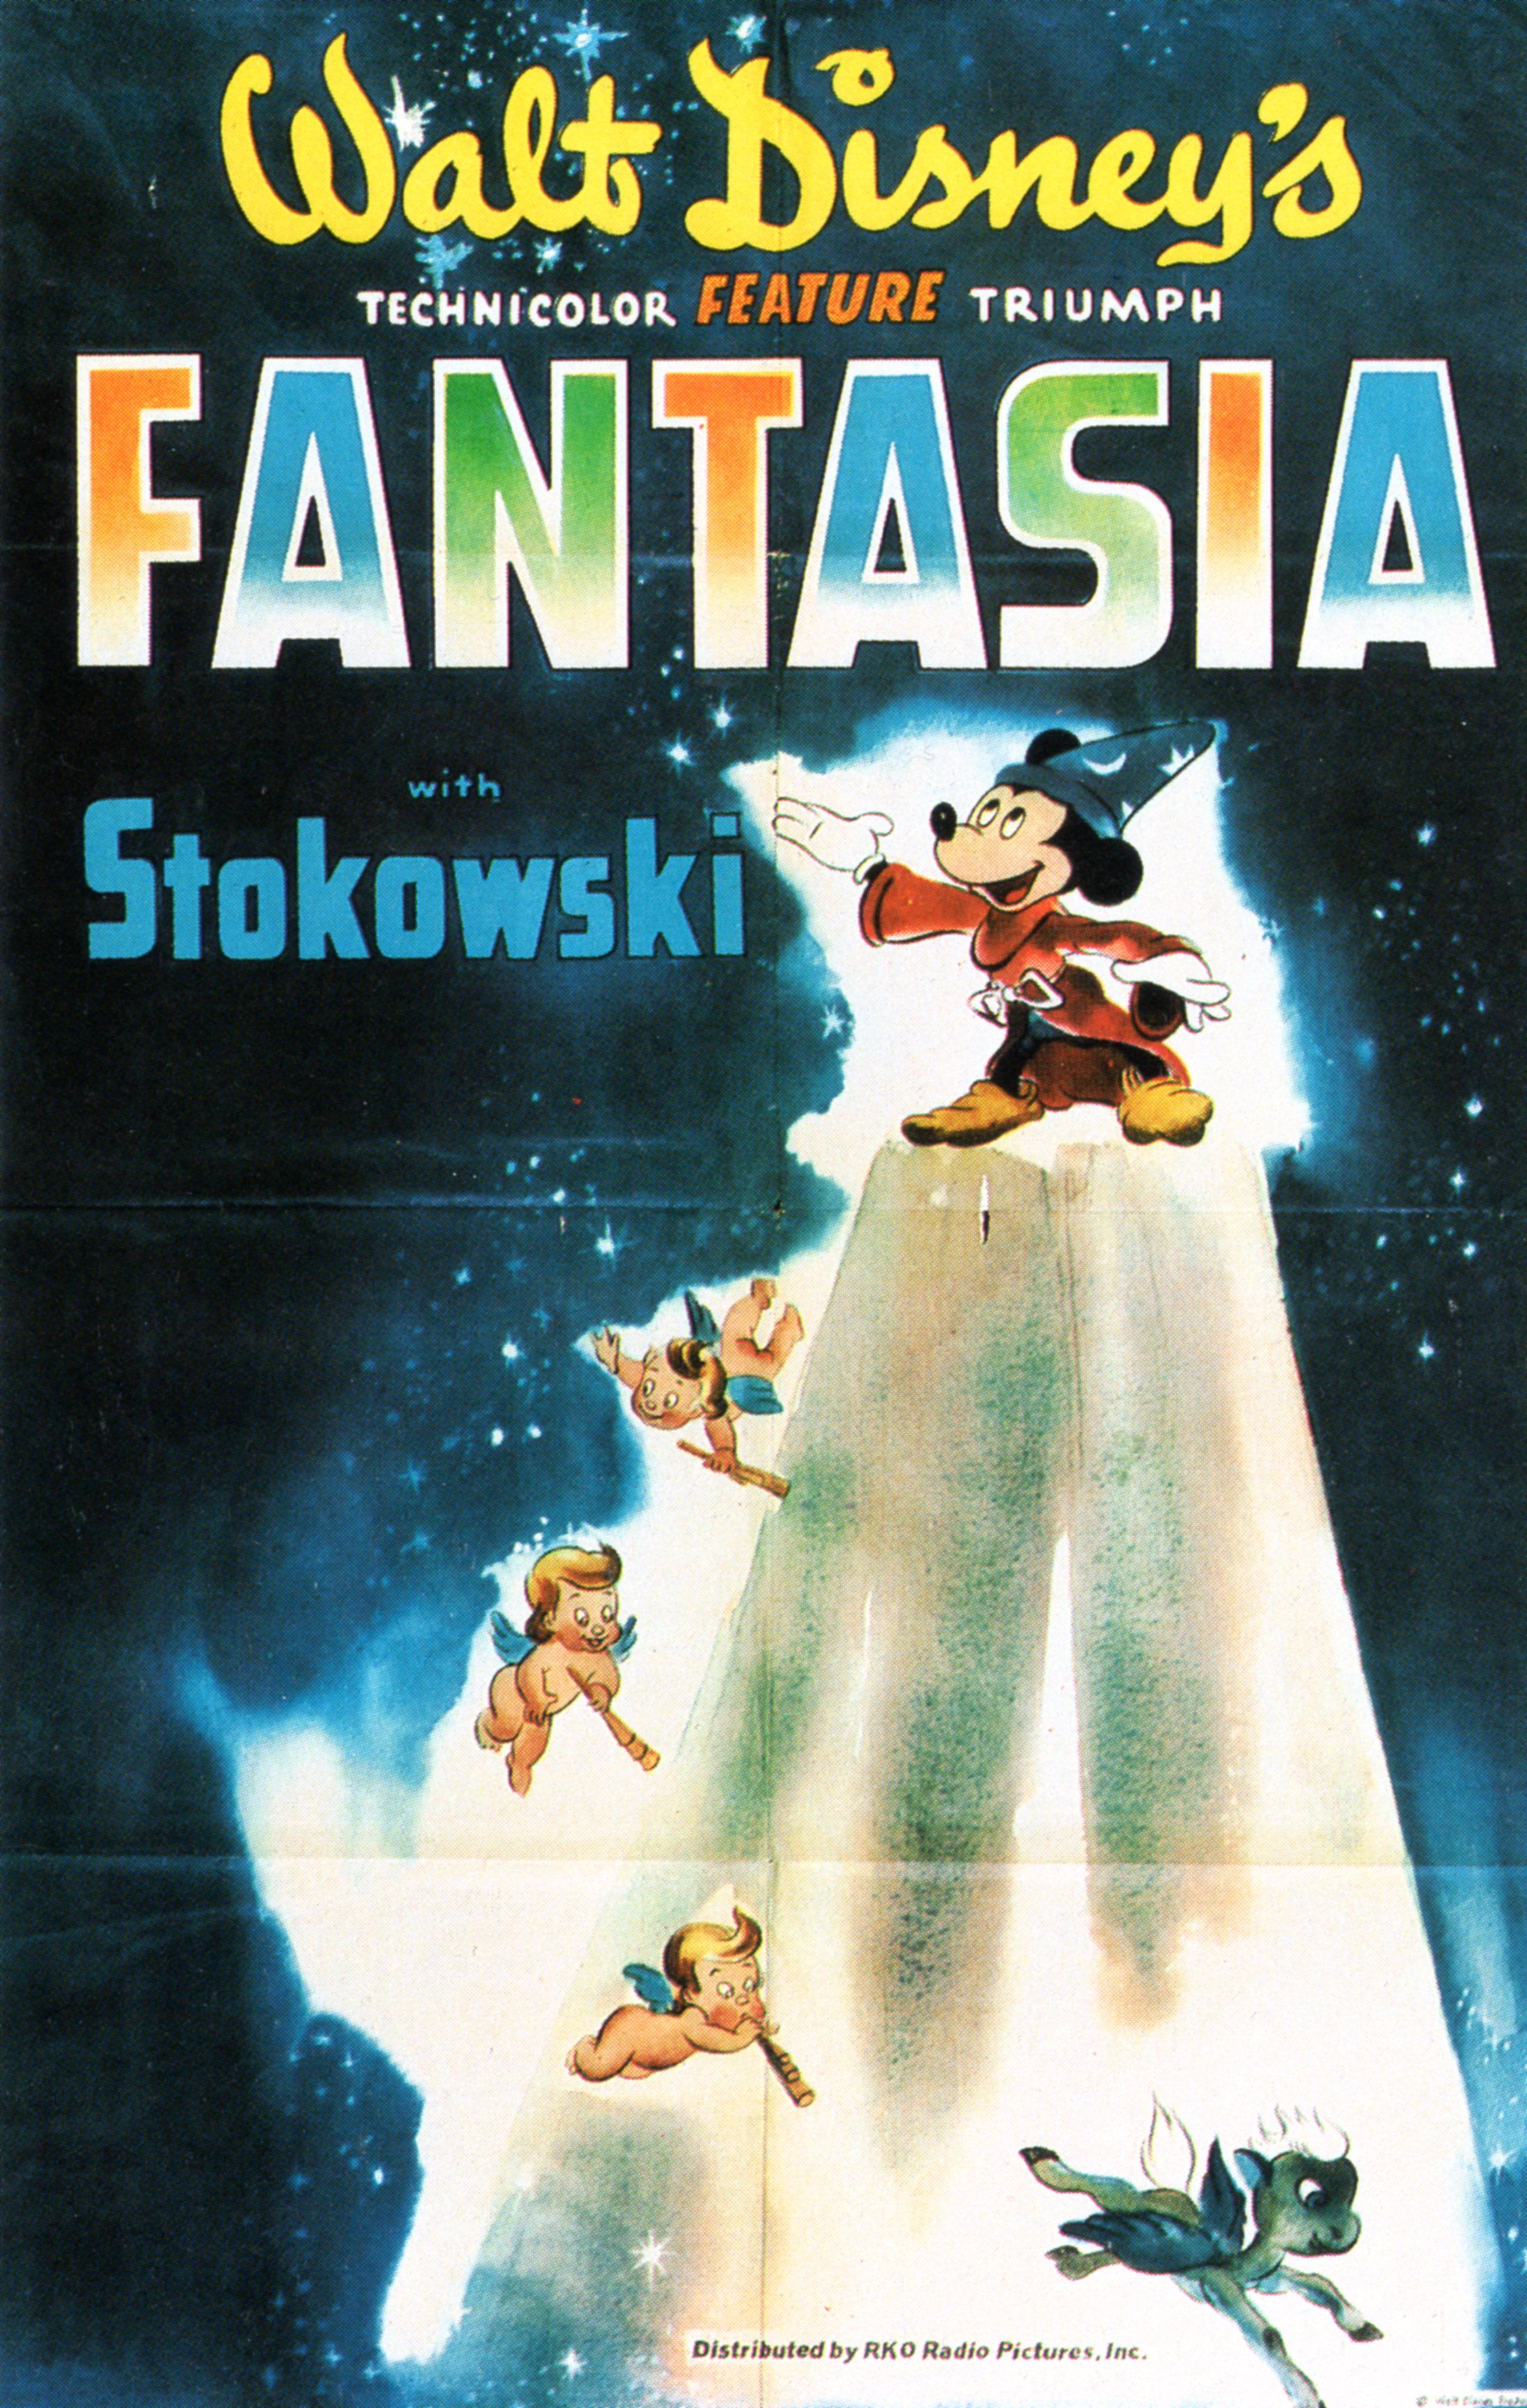 Fantasia Disney 1940 Ita Download